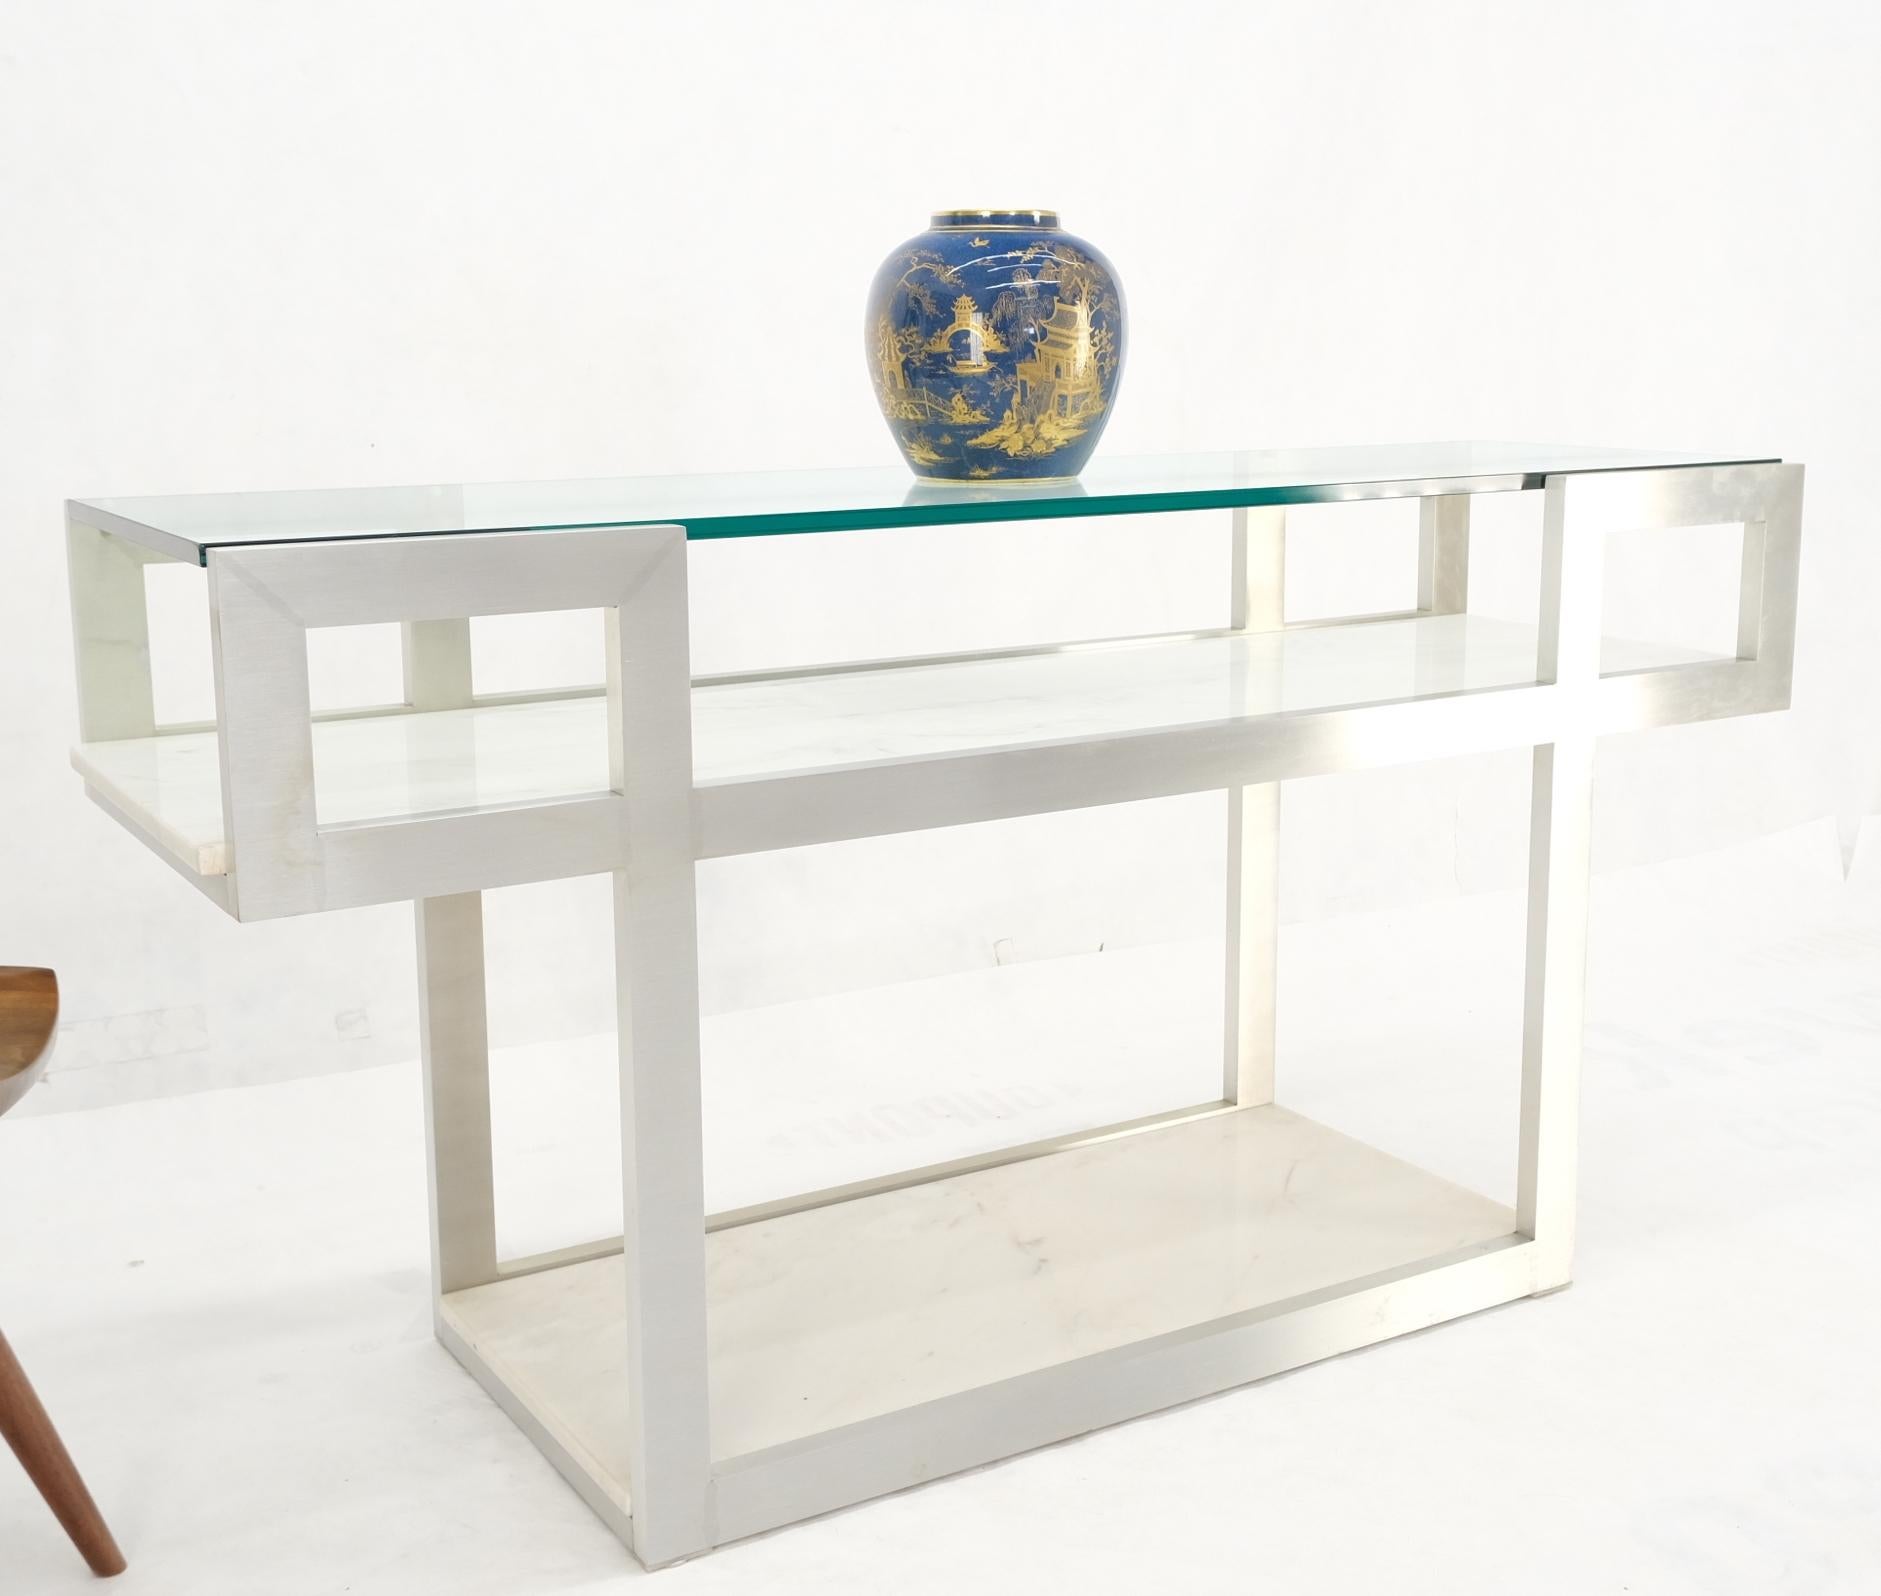 Aluminium-Rahmen Glasböden zwei Marmor Regale Konsole Sofa Tisch Mitte Jahrhundert mint!
 